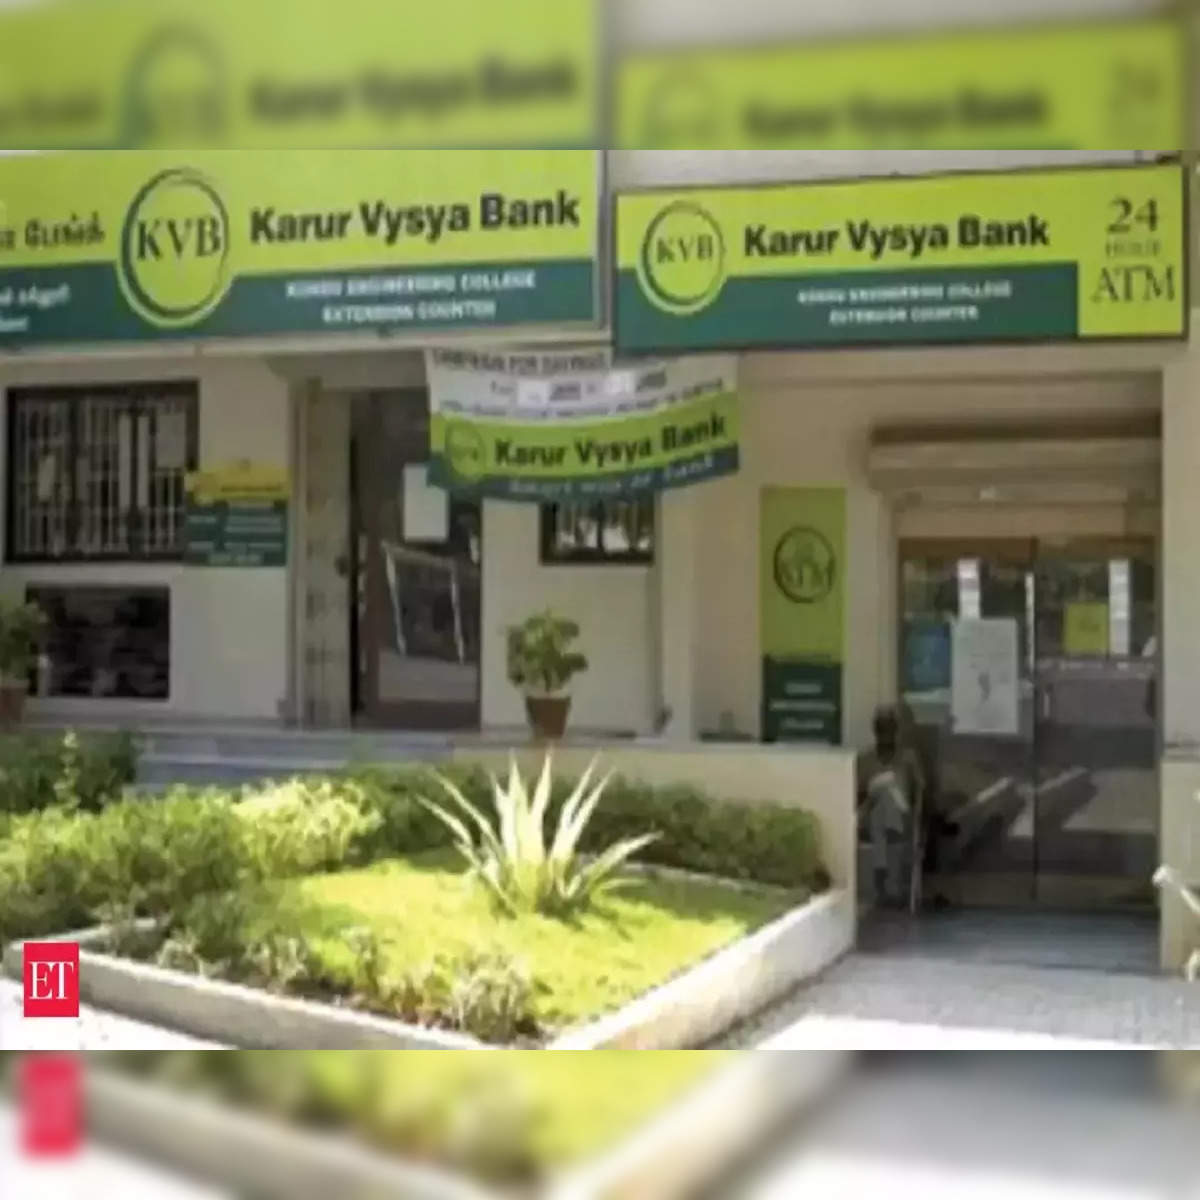 Karur Vysya Bank - Experience a secure and smart way to bank. Download the  DLite app now! https://bit.ly/3i30sMP #KVB #KarurVysyaBank #SmartWayToBank # Bank #Banking #OnlineBanking #DLiteApp | Facebook